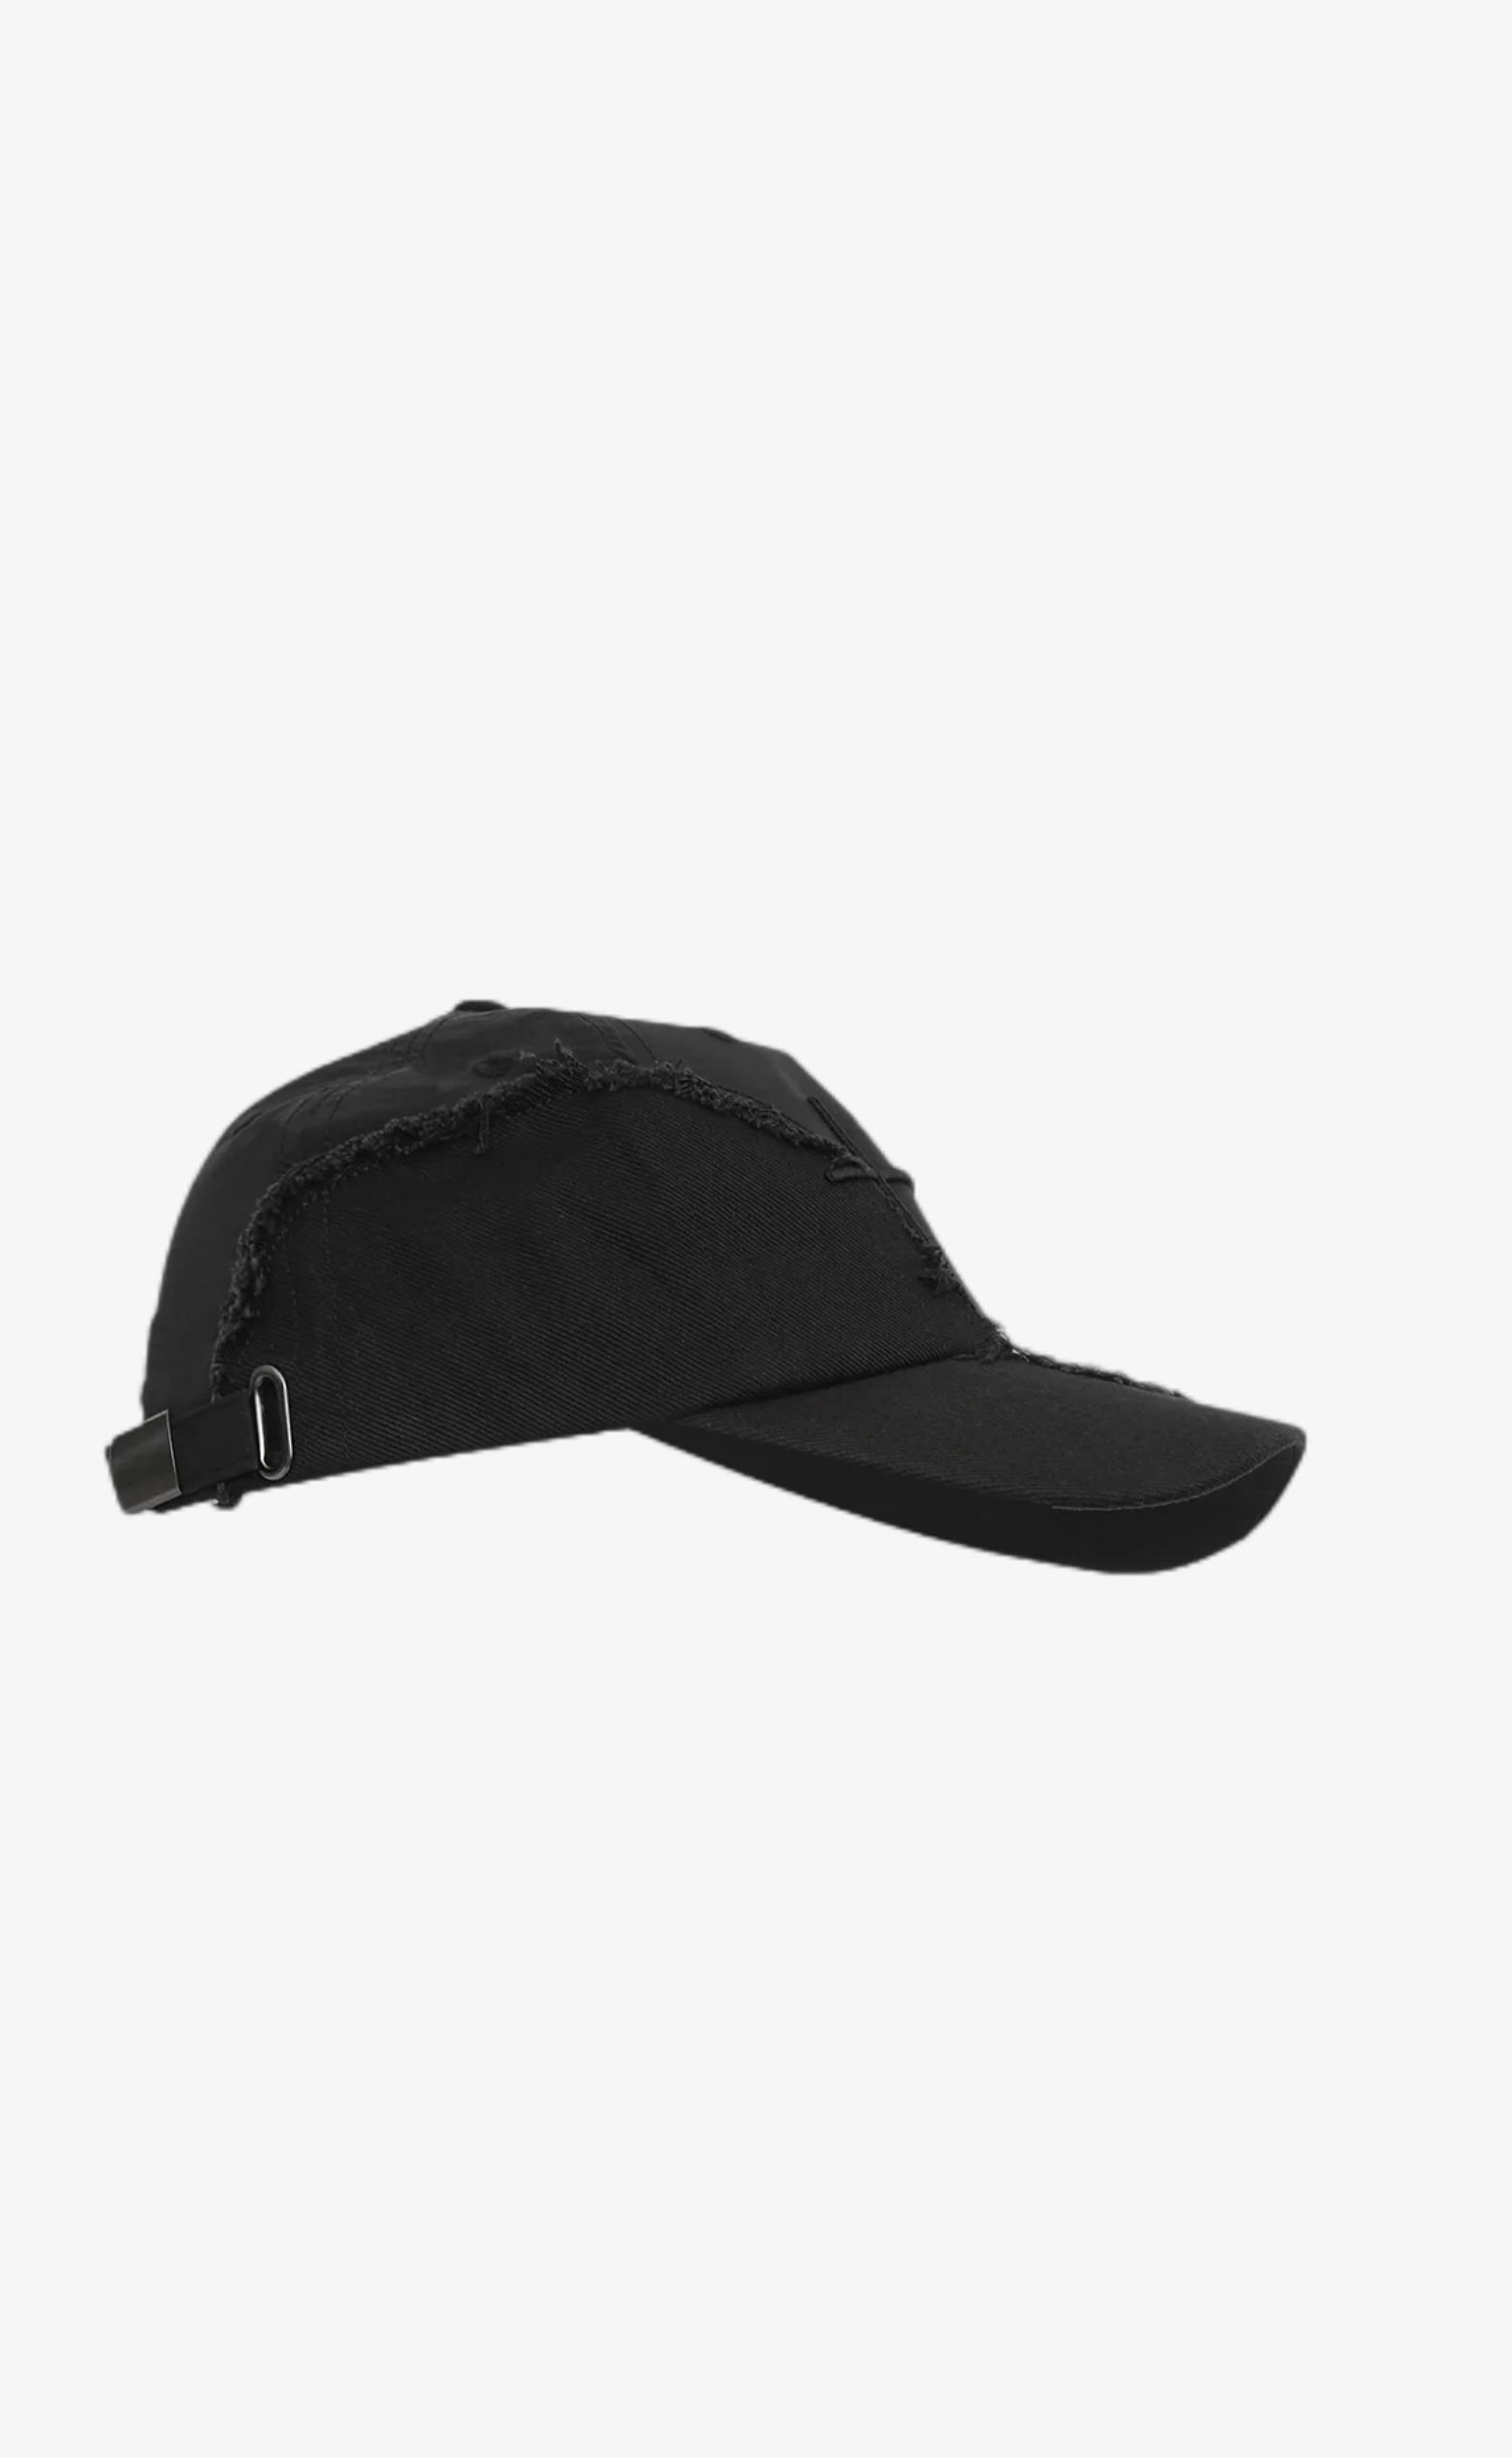 FISSION BLACK HAT